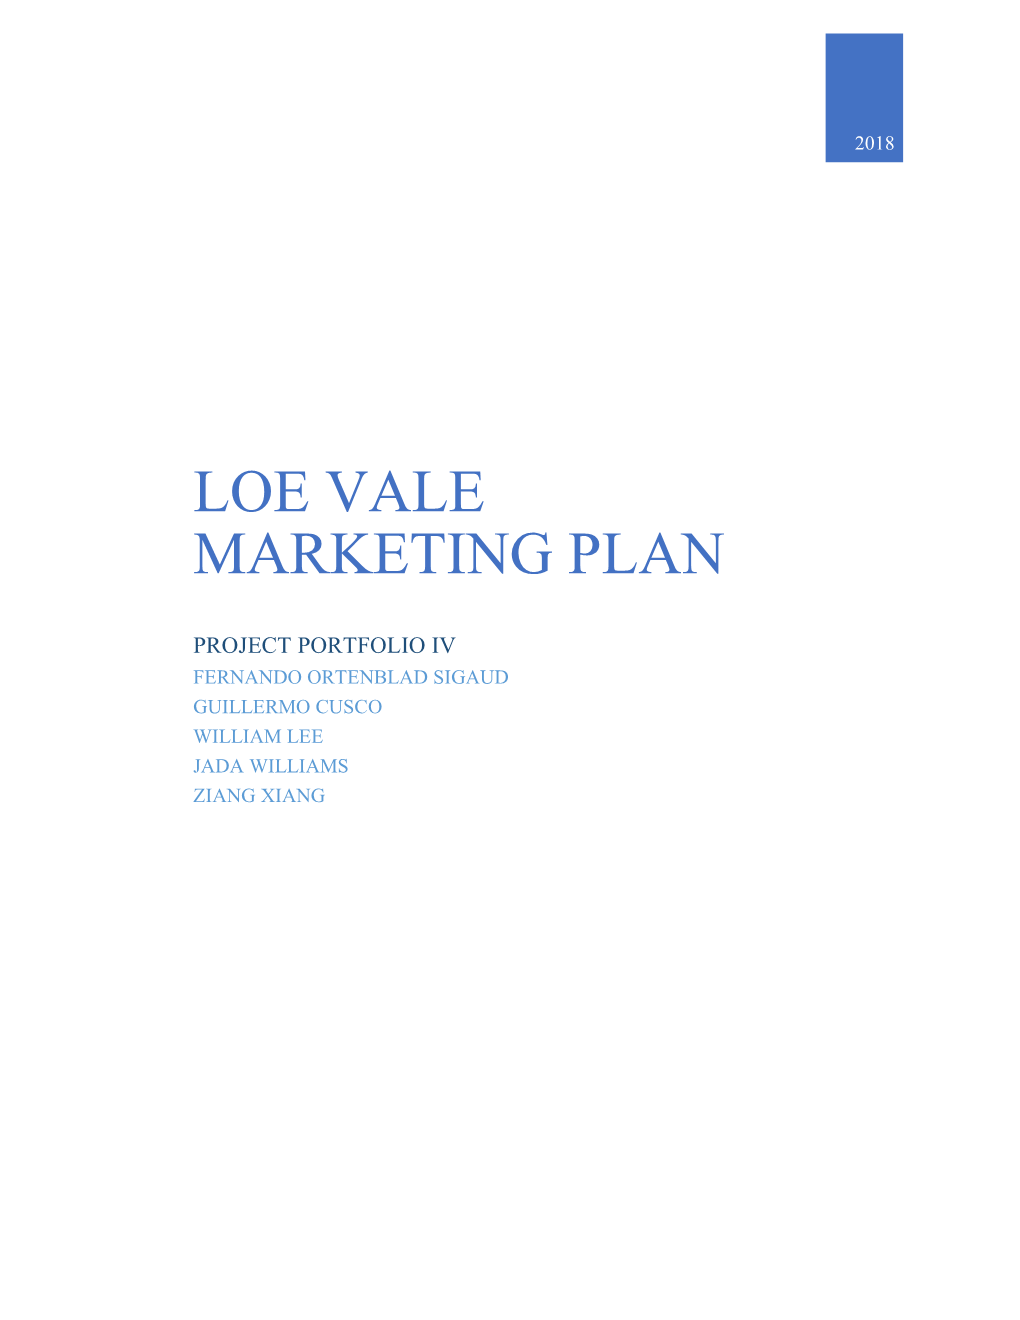 Loe Vale Marketing Plan